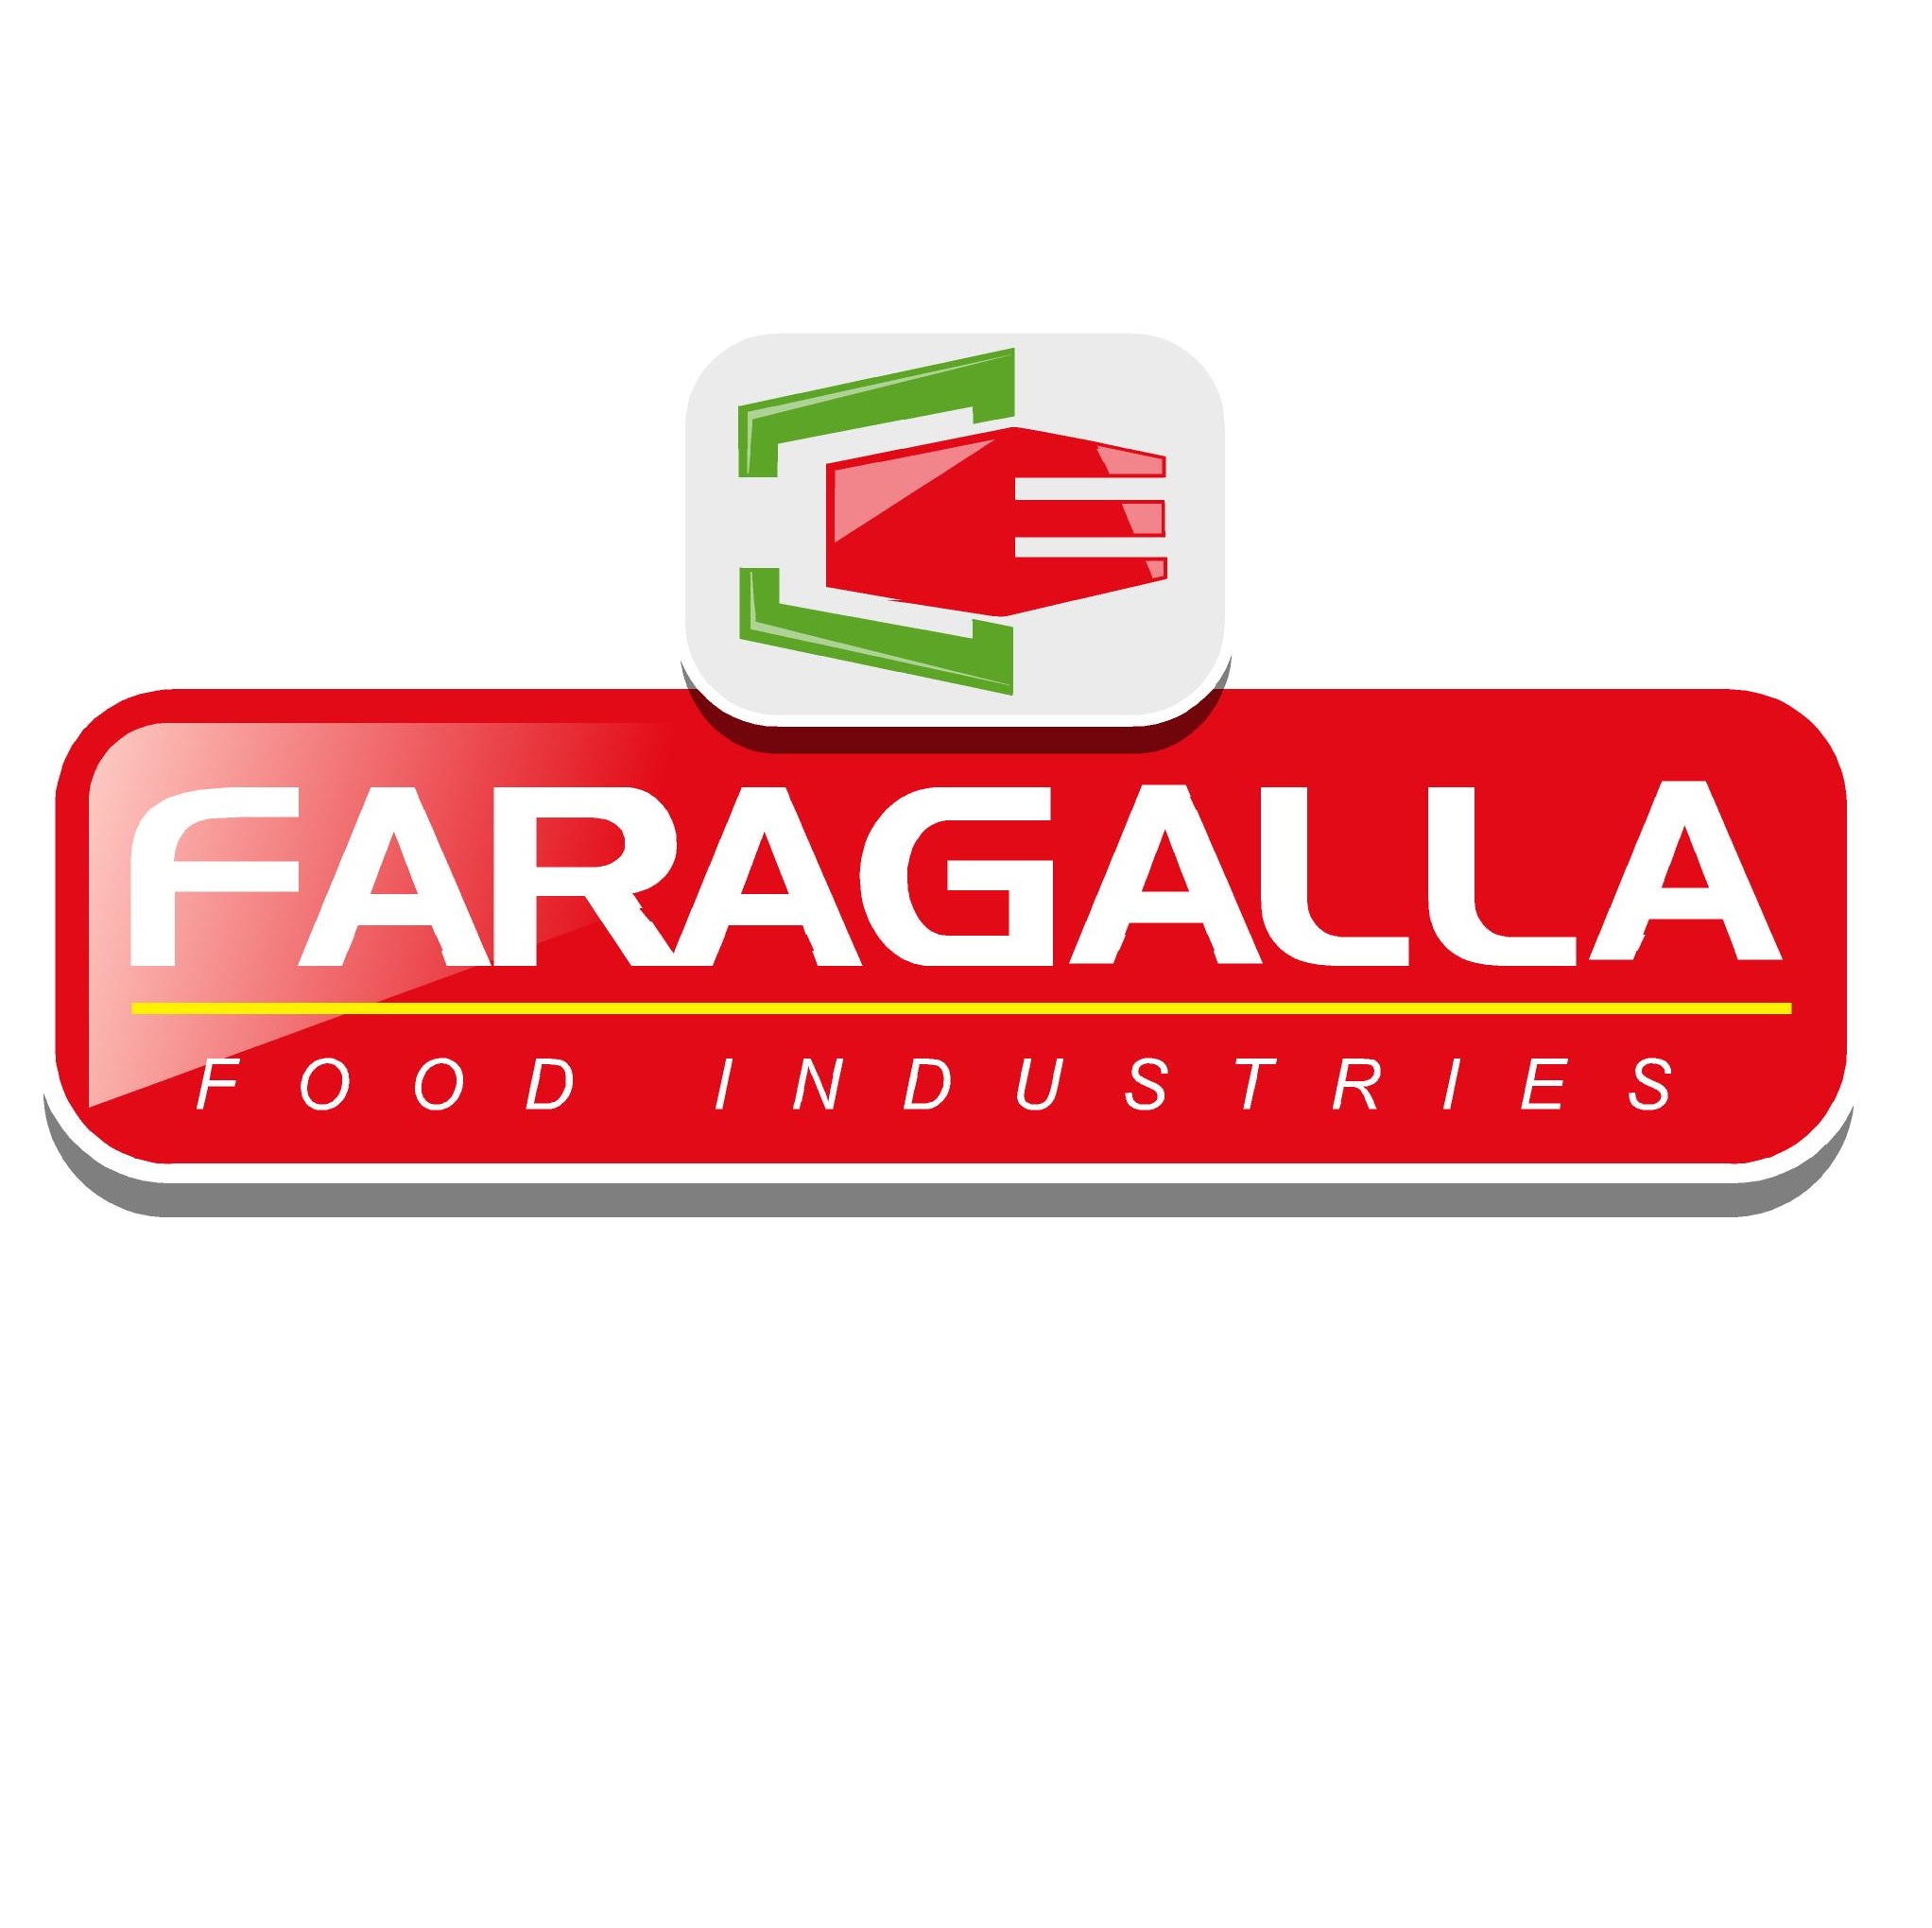 Faragalla group